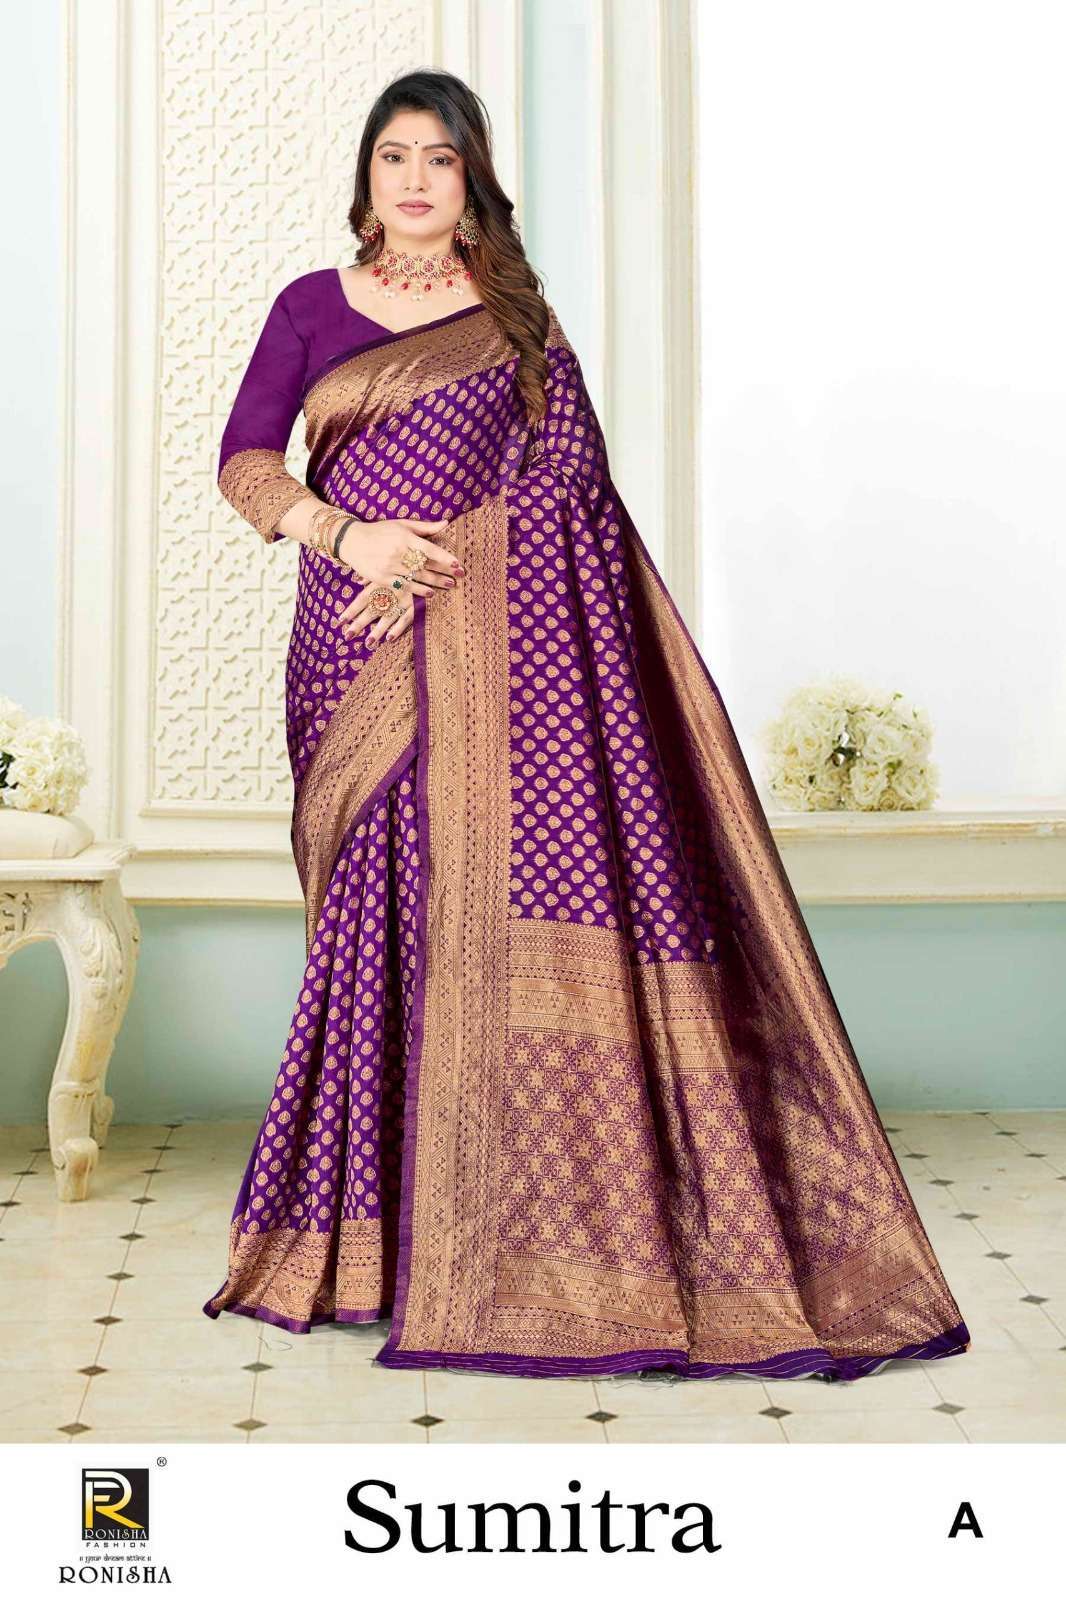 Ronisha Sumitra Banarasi Silk Saree manufacturer in India